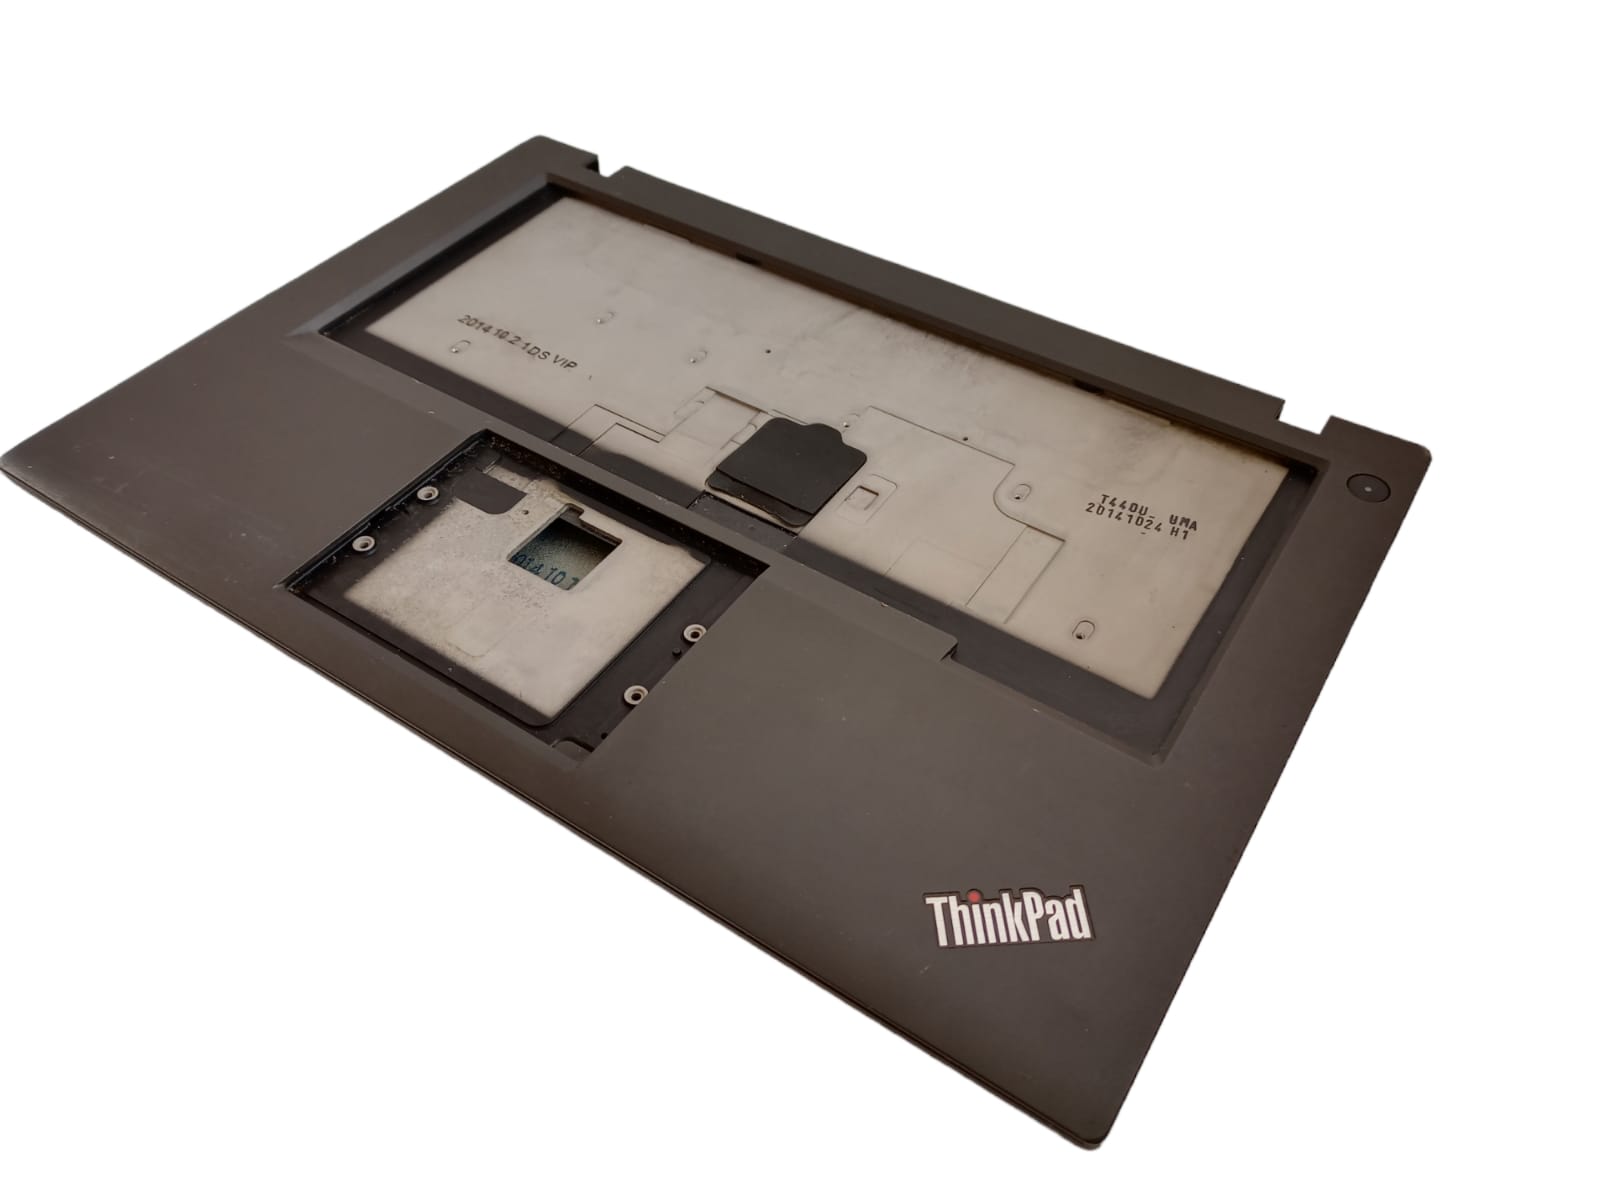 Carcasa base superior - inferior y Palmrest  de Laptop Lenovo Thinkpad T440  (Producto usado)